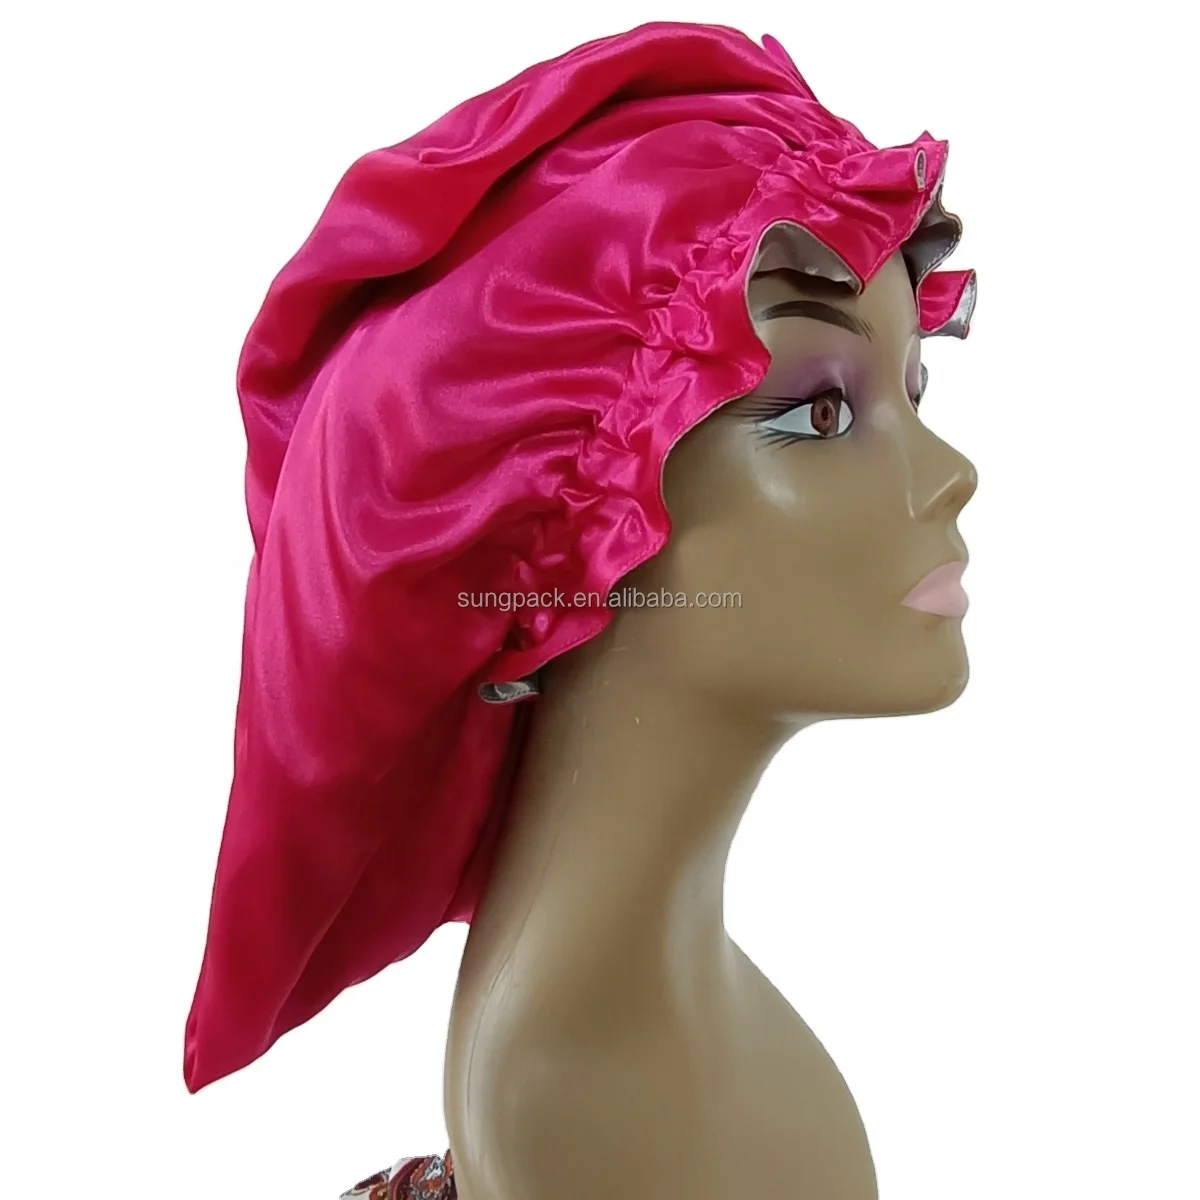 

32inches Adjustable Silk Slap Clasped Satin Bonnet For Women Long Braids Hair Double Layers Sleep Caps